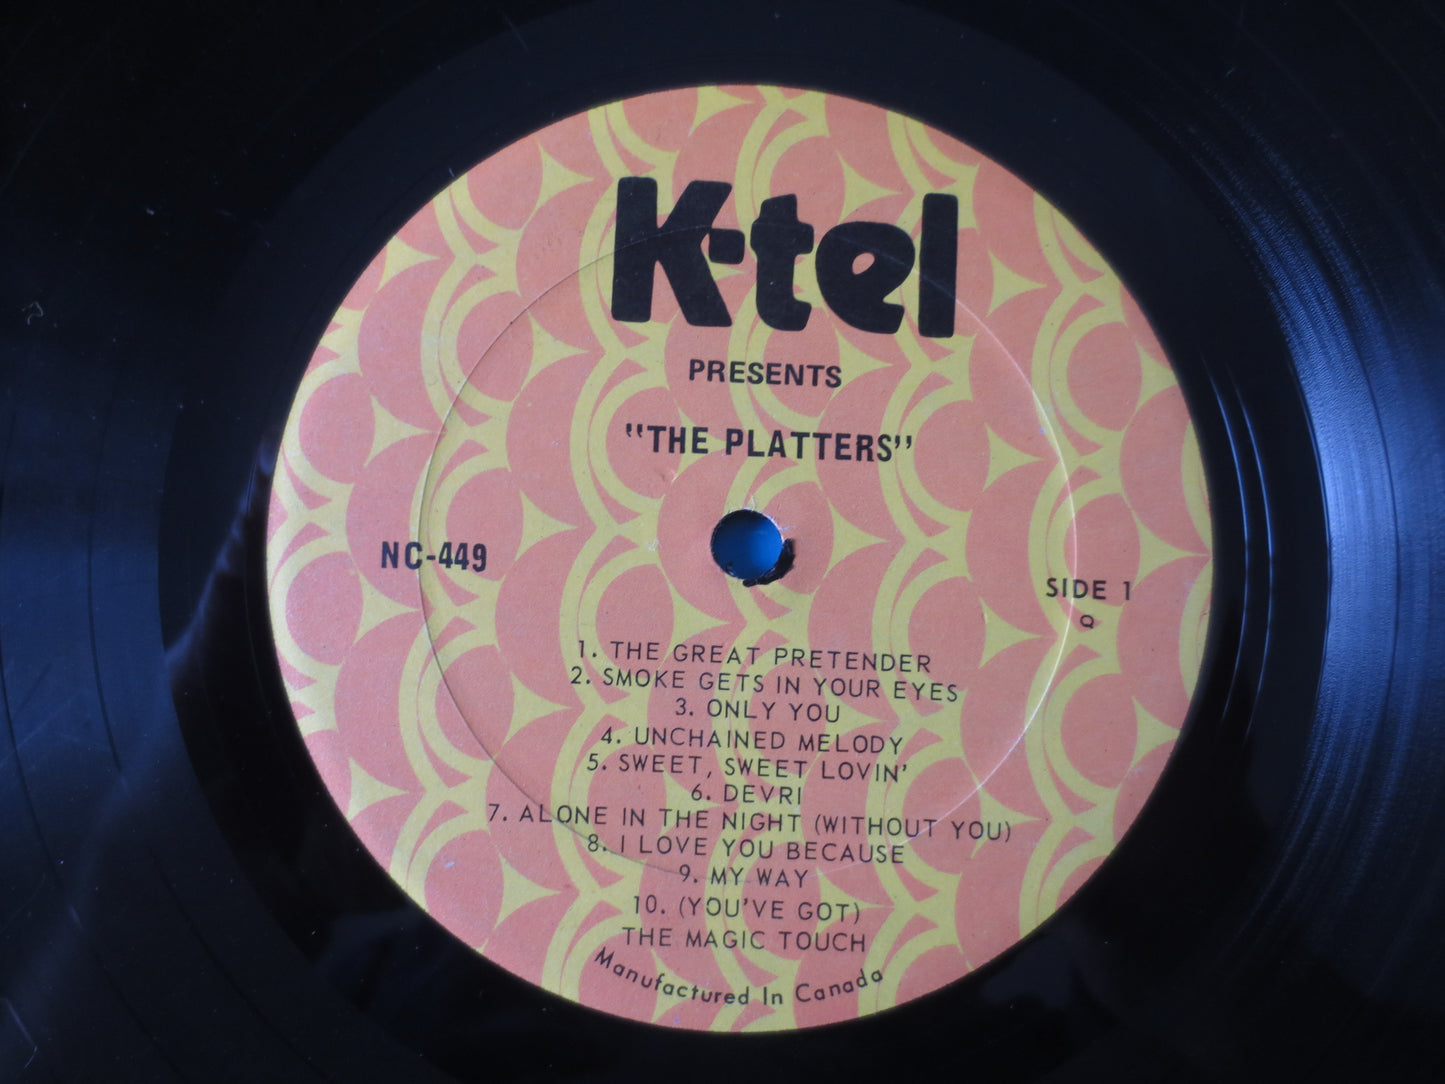 The PLATTERS, K-TEL RECORDS, 20 Fantastic Hits, The Platters Albums, The Platters Vinyl, Platters Lp, 1975 Records